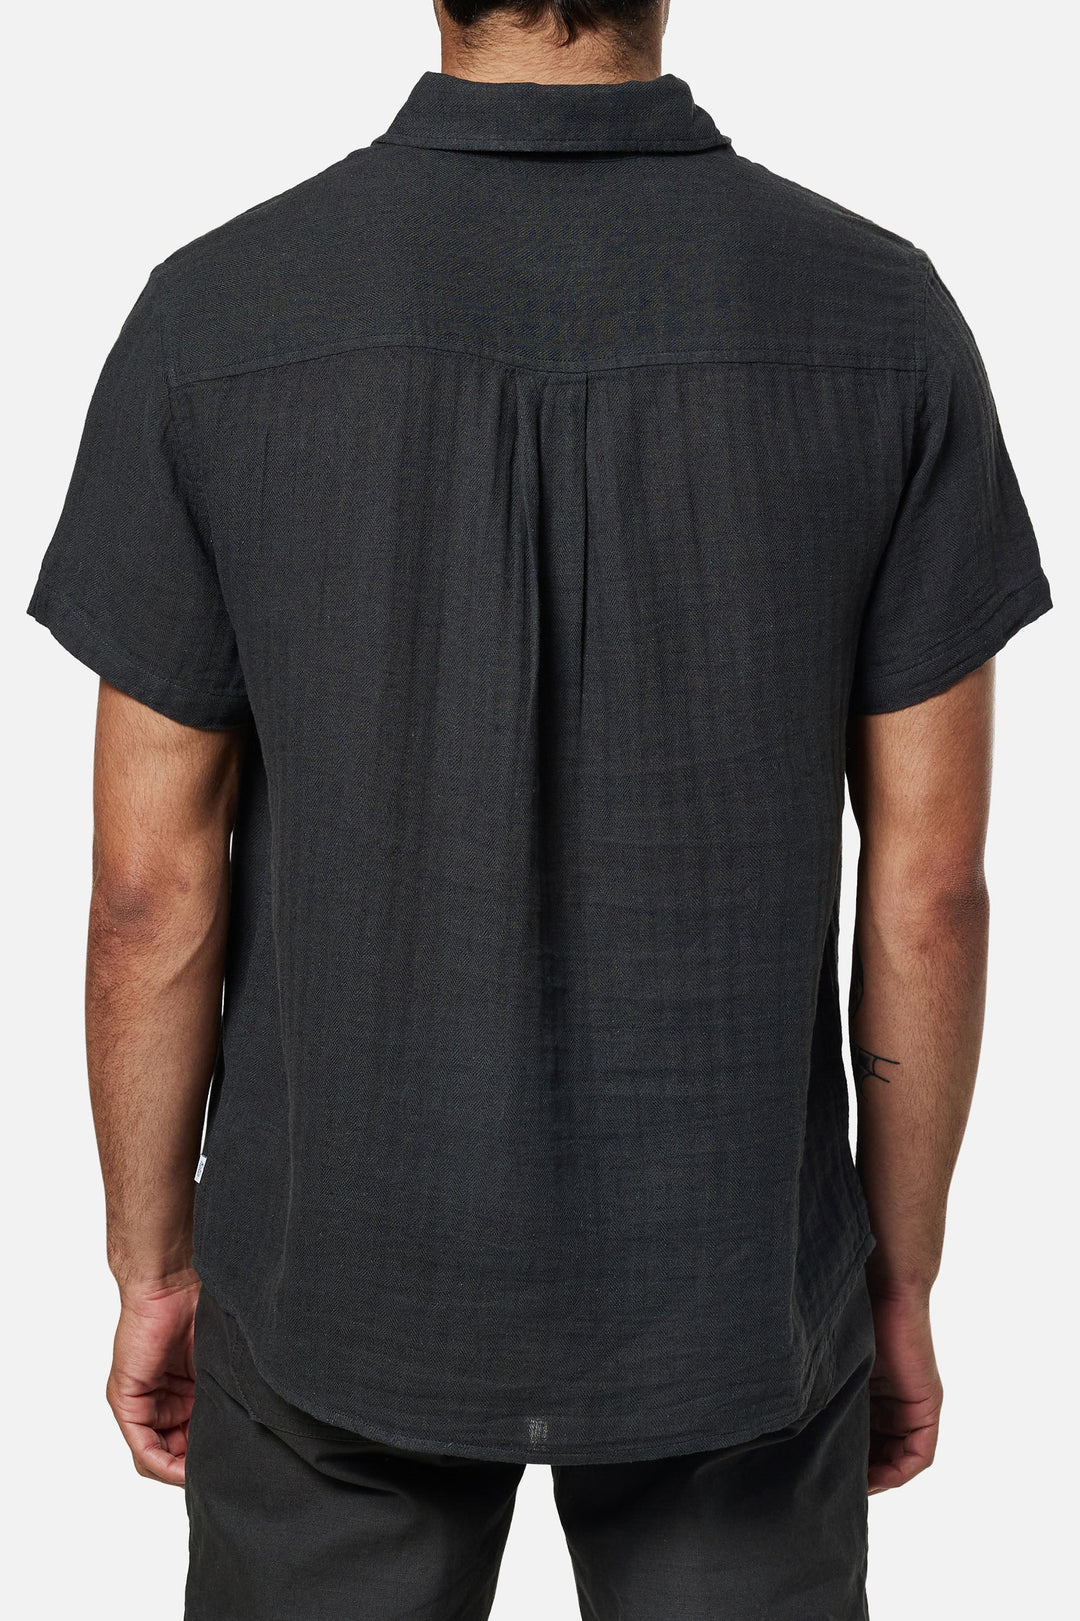 Katin Alan Solid Shirt - BLACK WASH - Sun Diego Boardshop